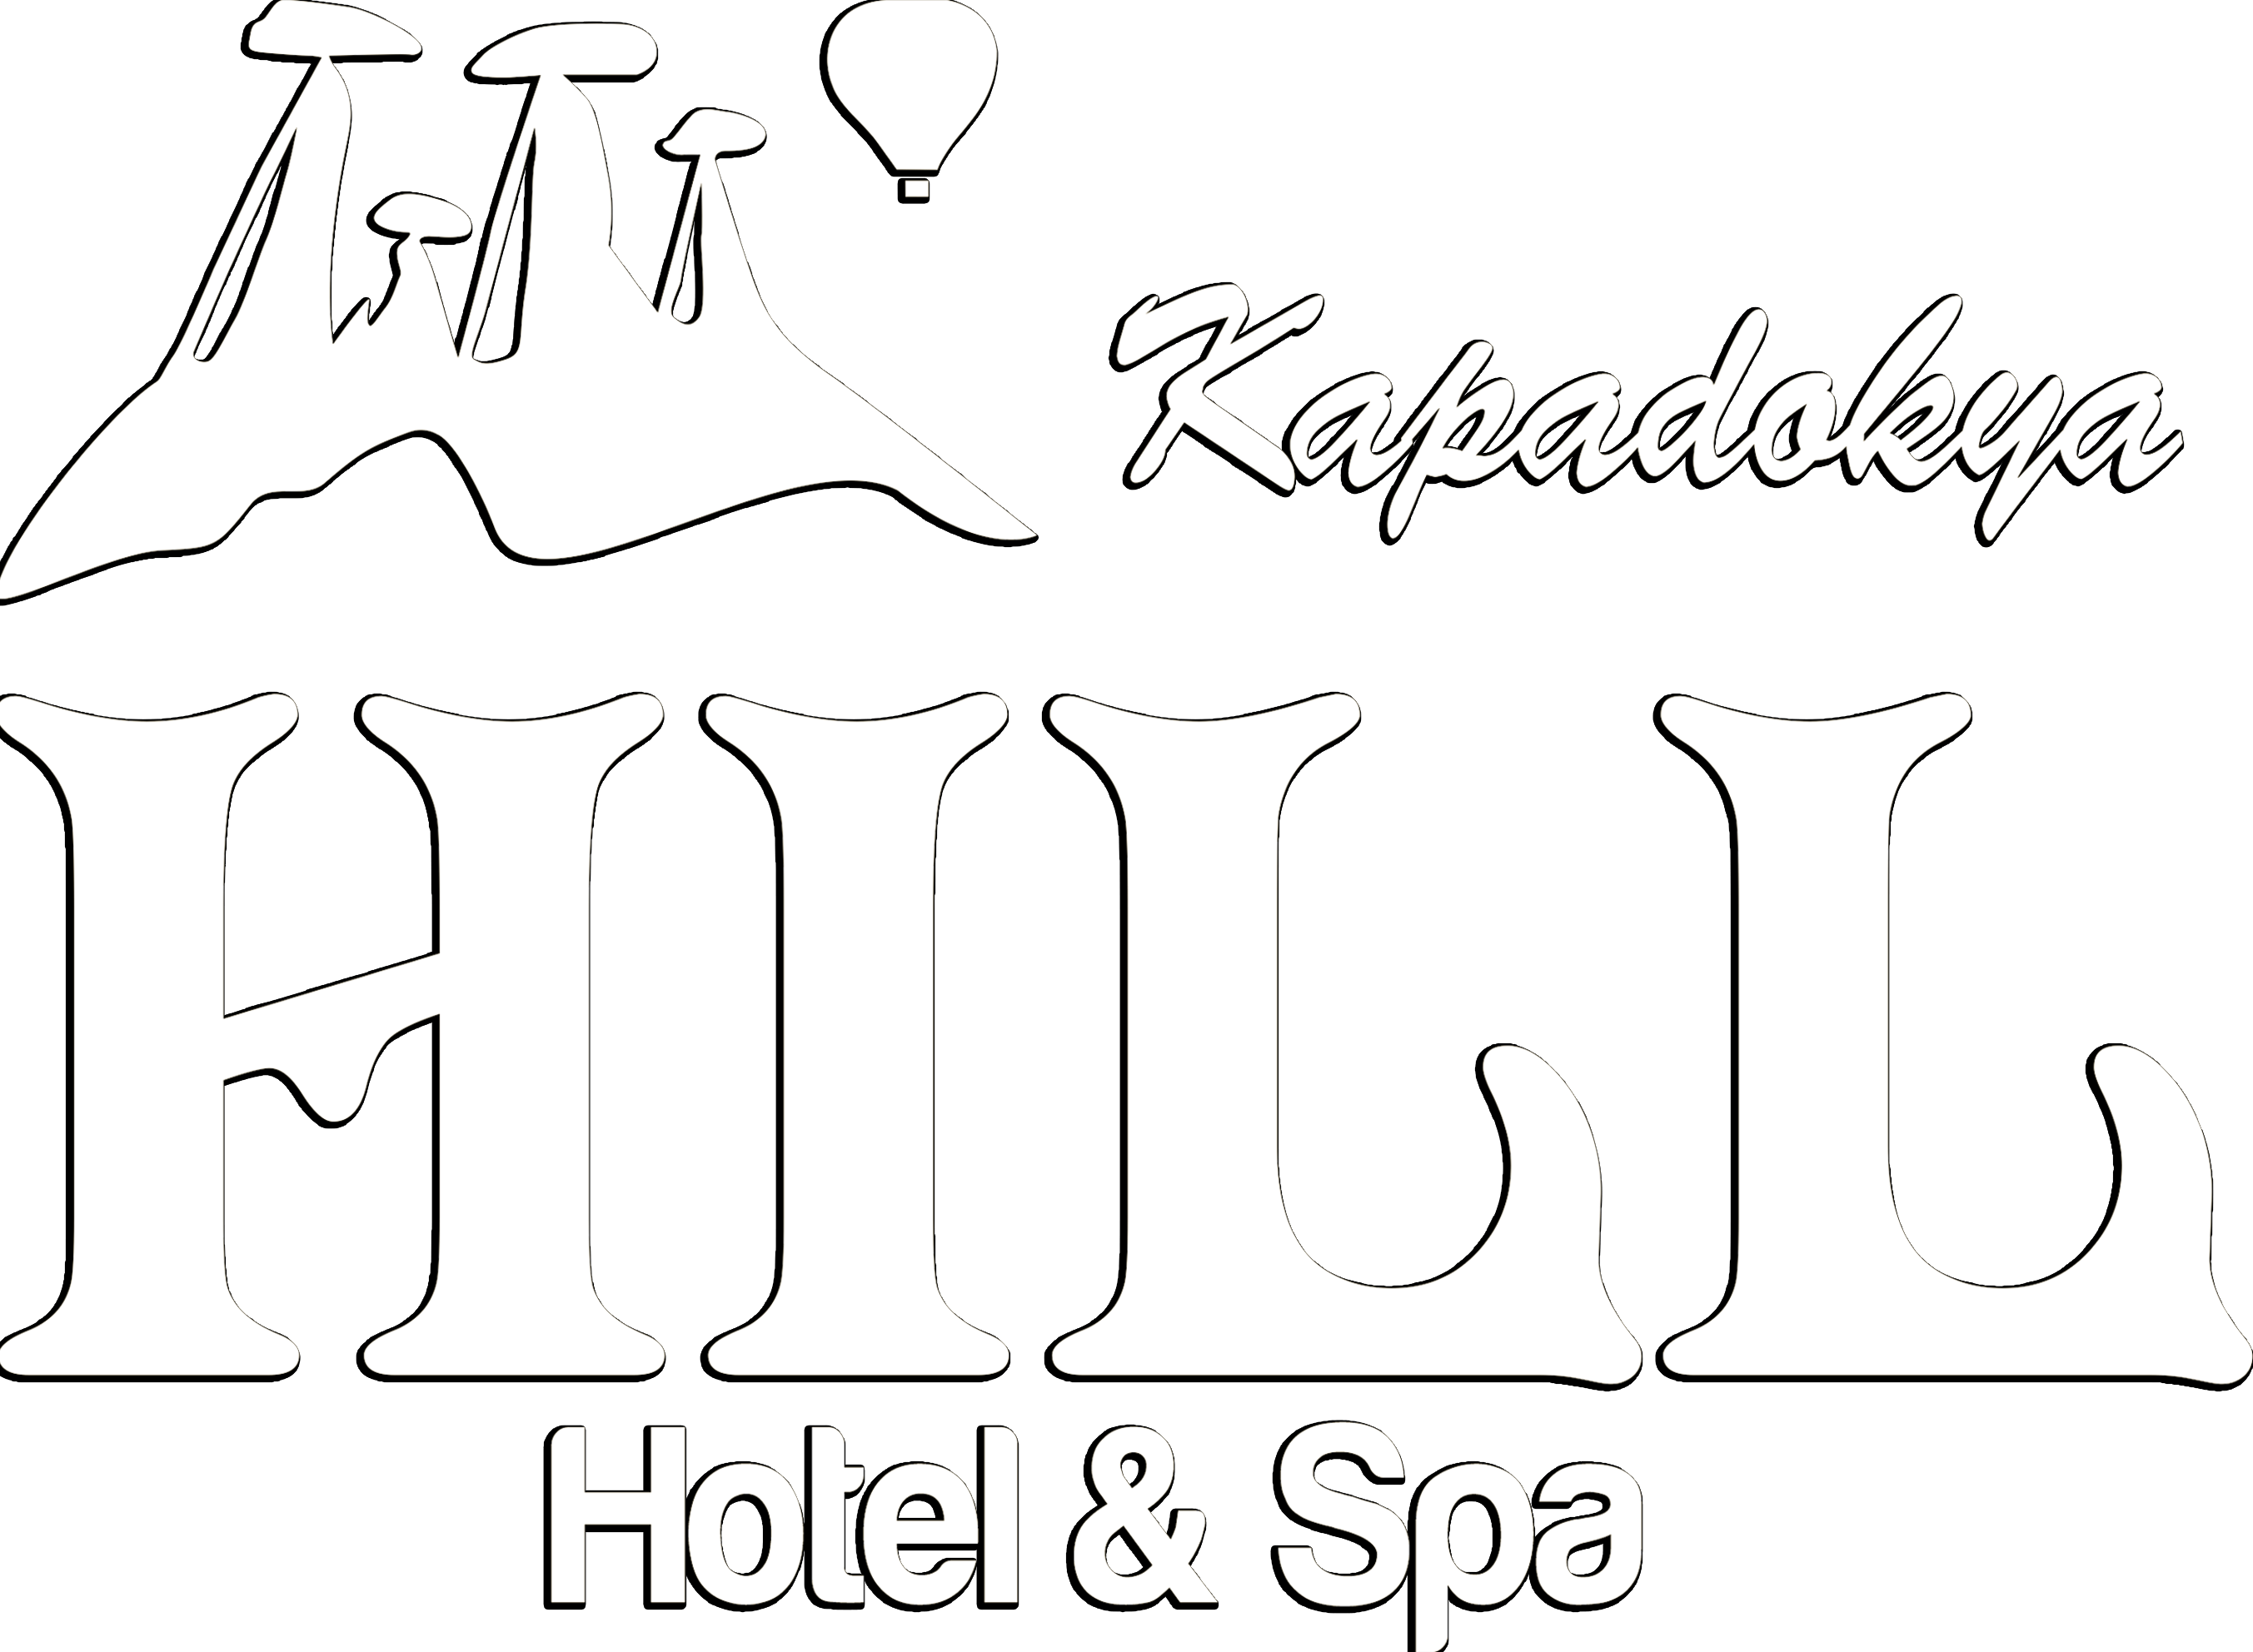 kapadokya_hill_hotel_spa_whitelogo.png